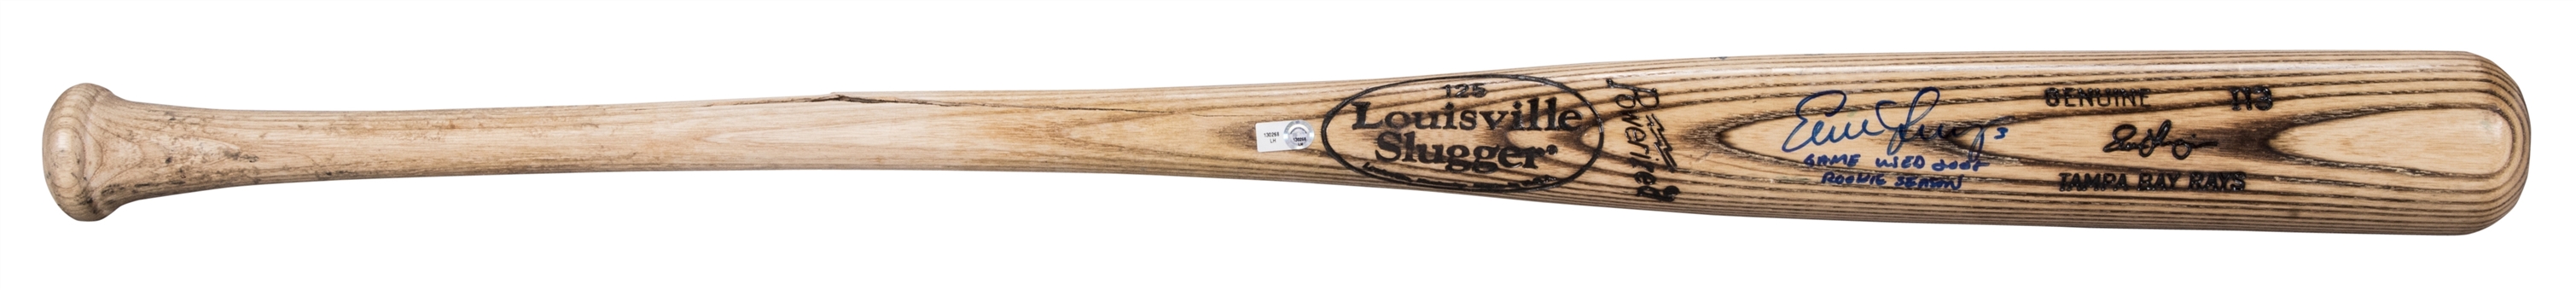 2008 Evan Longoria Game Used, Signed & Inscribed Louisville Slugger I13 Model Bat Used On 9/20/08 Vs. Minnesota (MLB Authenticated & PSA/DNA)